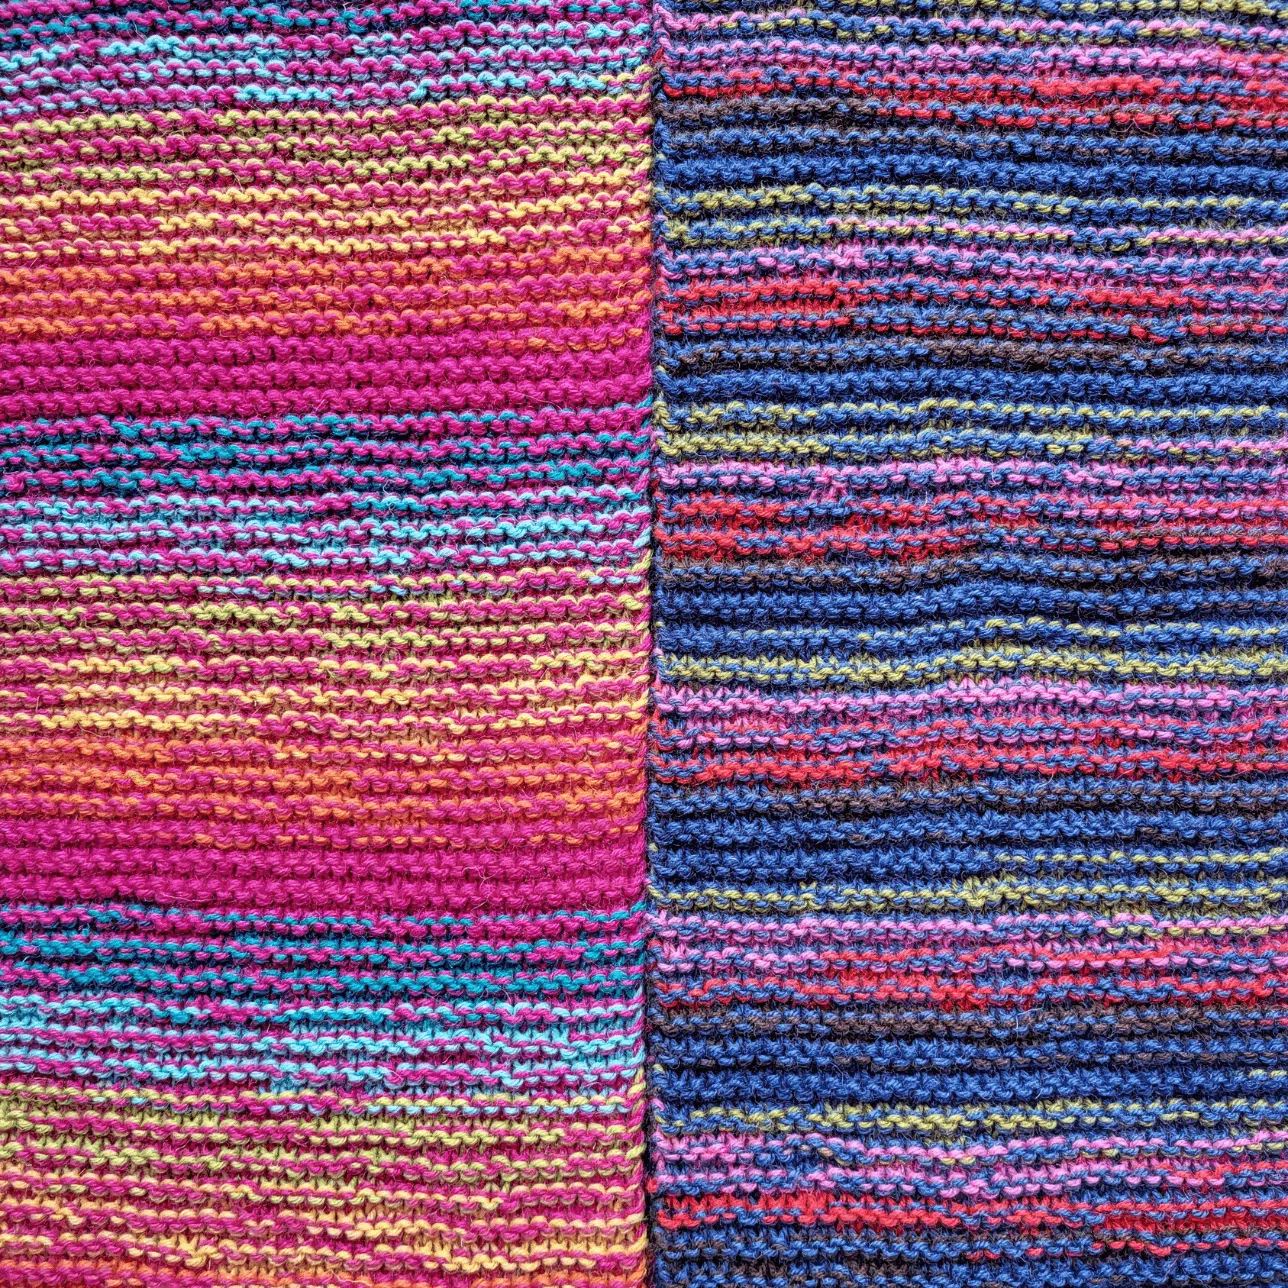 Sitting Knitting kits - garter stitch scarf